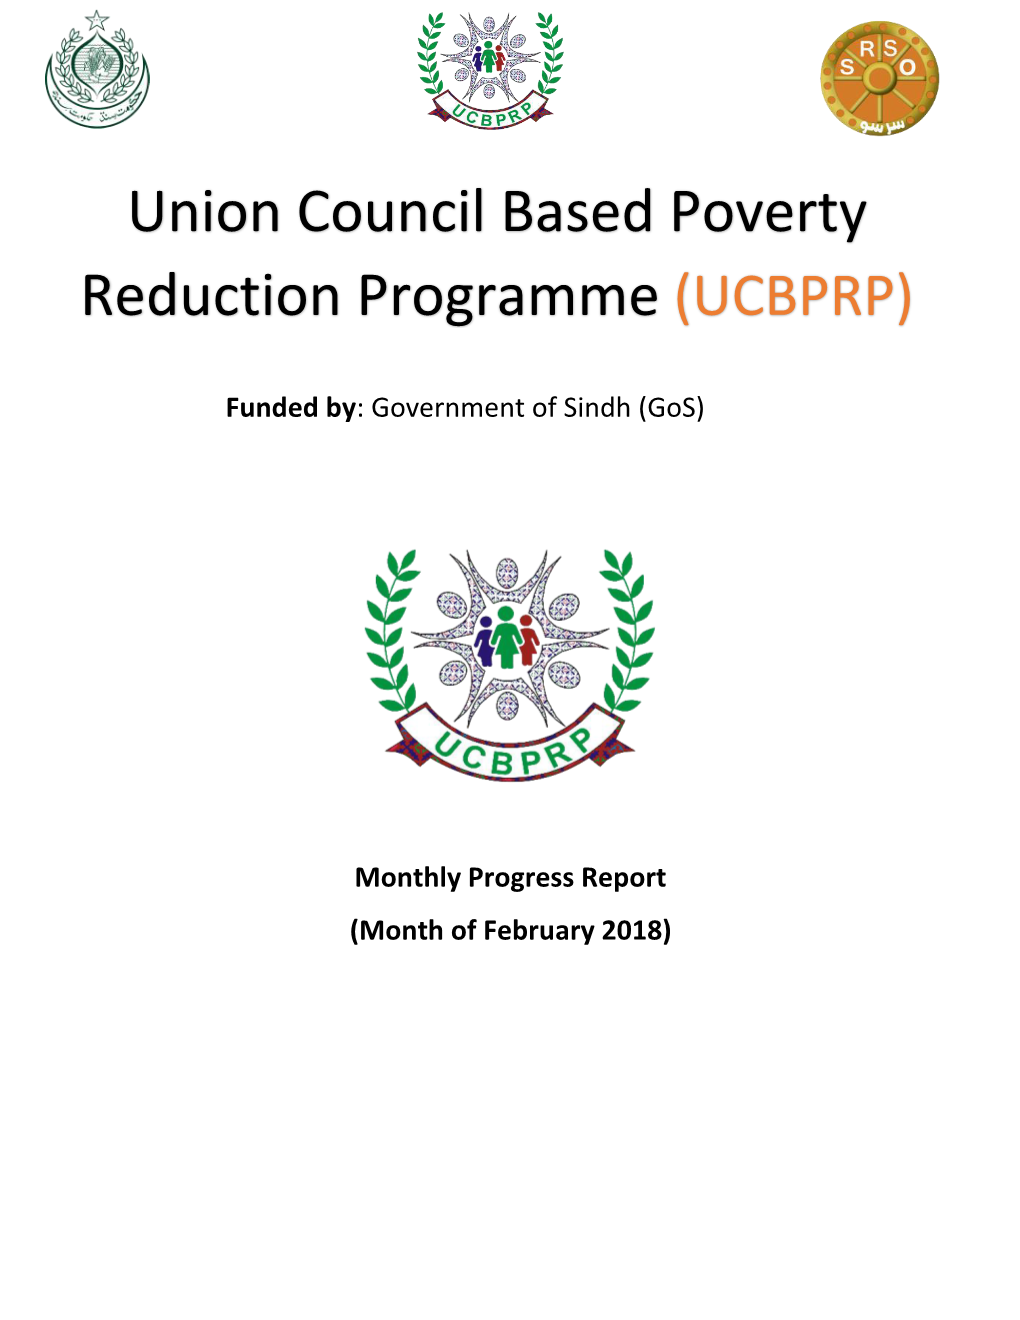 Union Council Based Poverty Reduction Programme (UCBPRP)